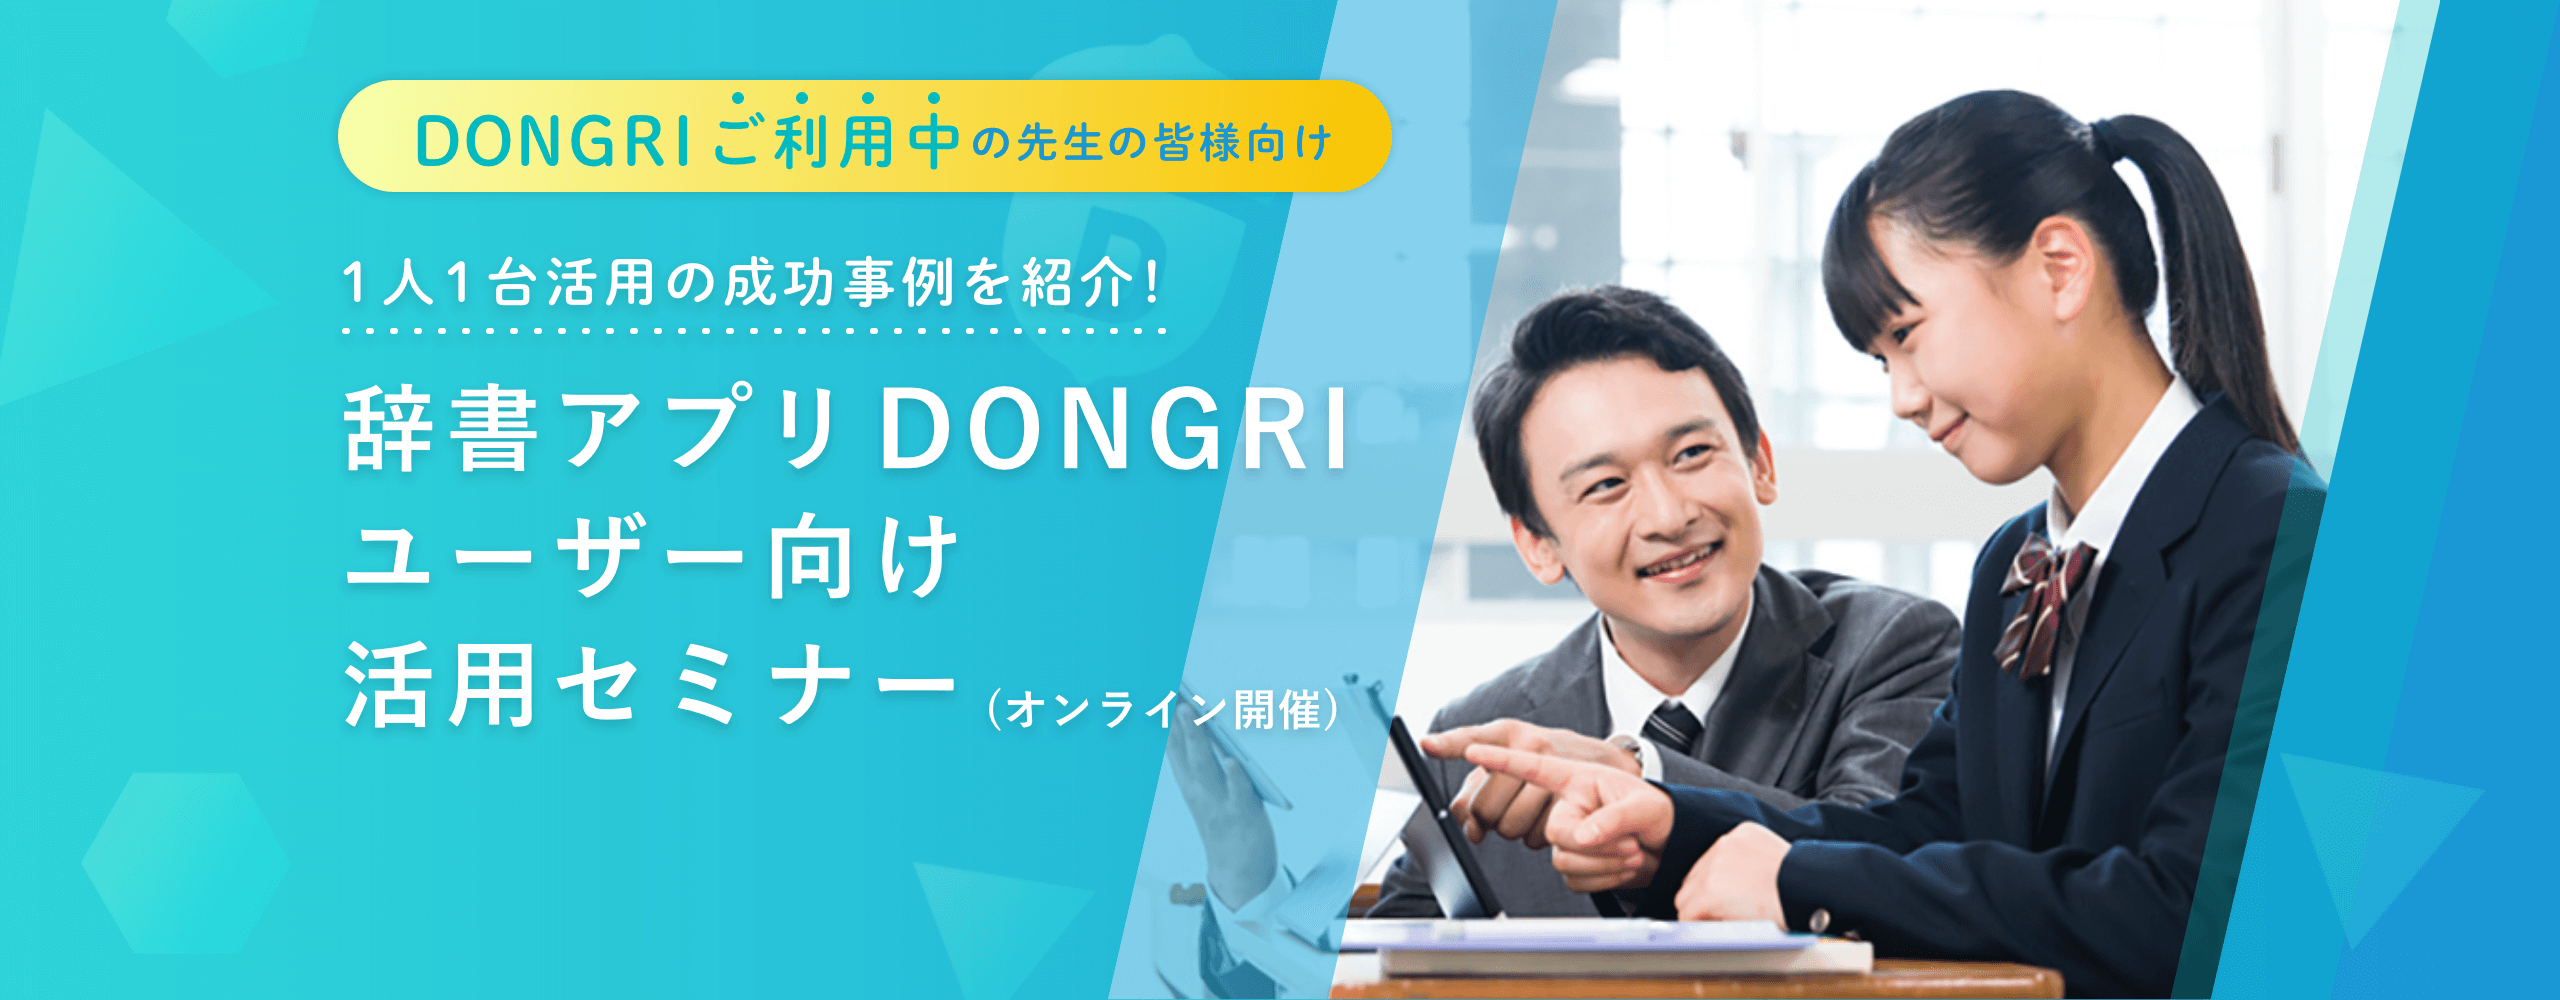 【DONGRI導入済みの先生・生徒向け】アプリDONGRI ユーザー向け活用セミナー(オンライン開催)2021年5月・6月開催